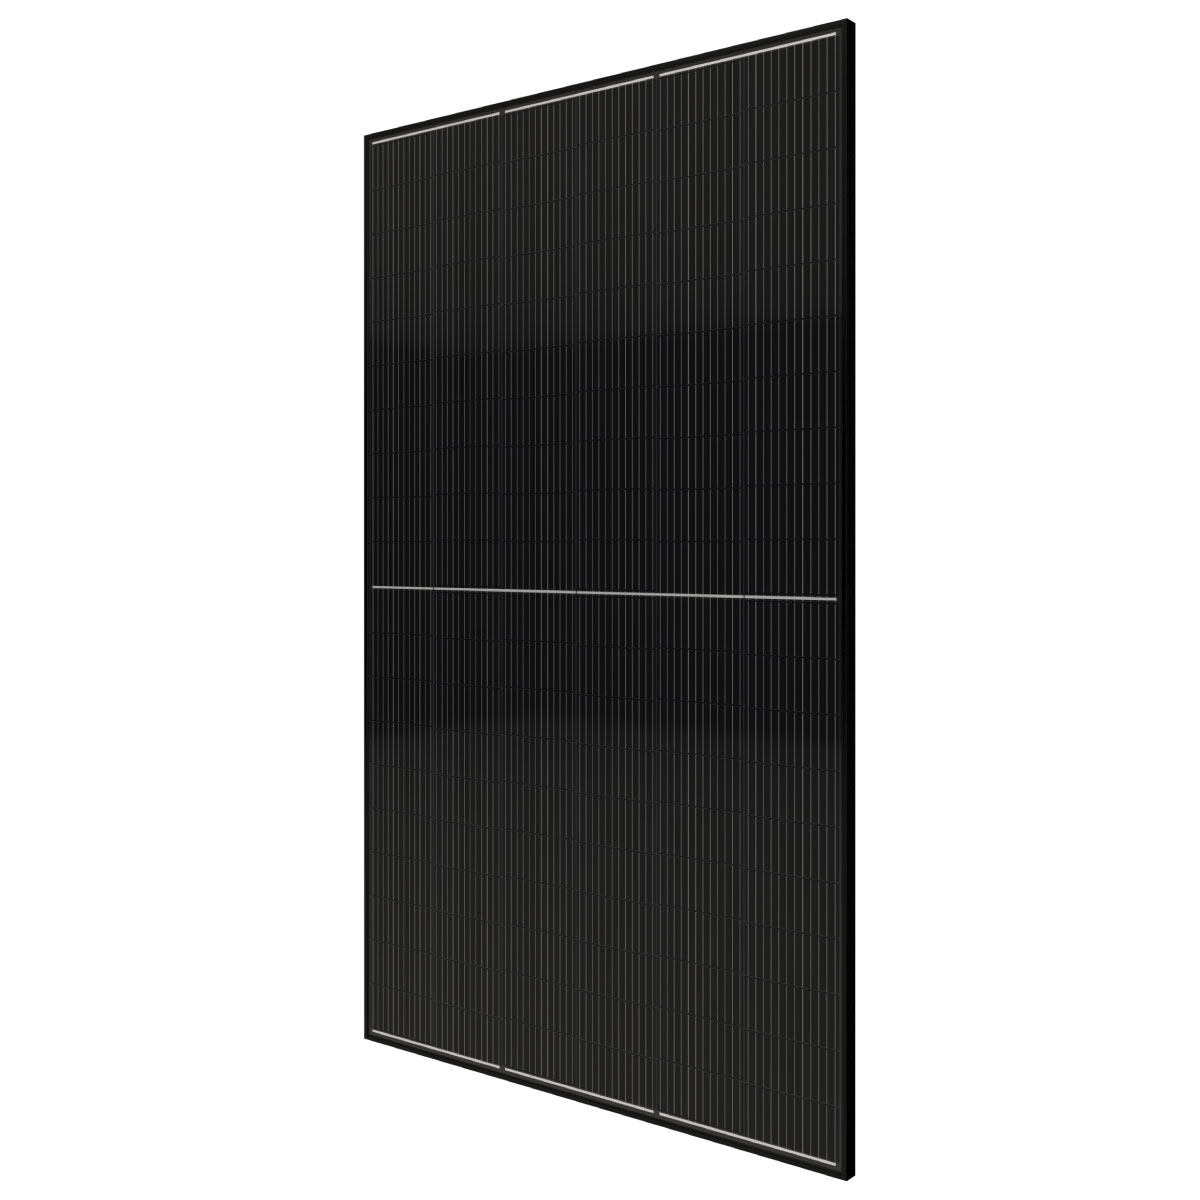 TommaTech 590Wp 120PM M12 Full Black Solar Panel